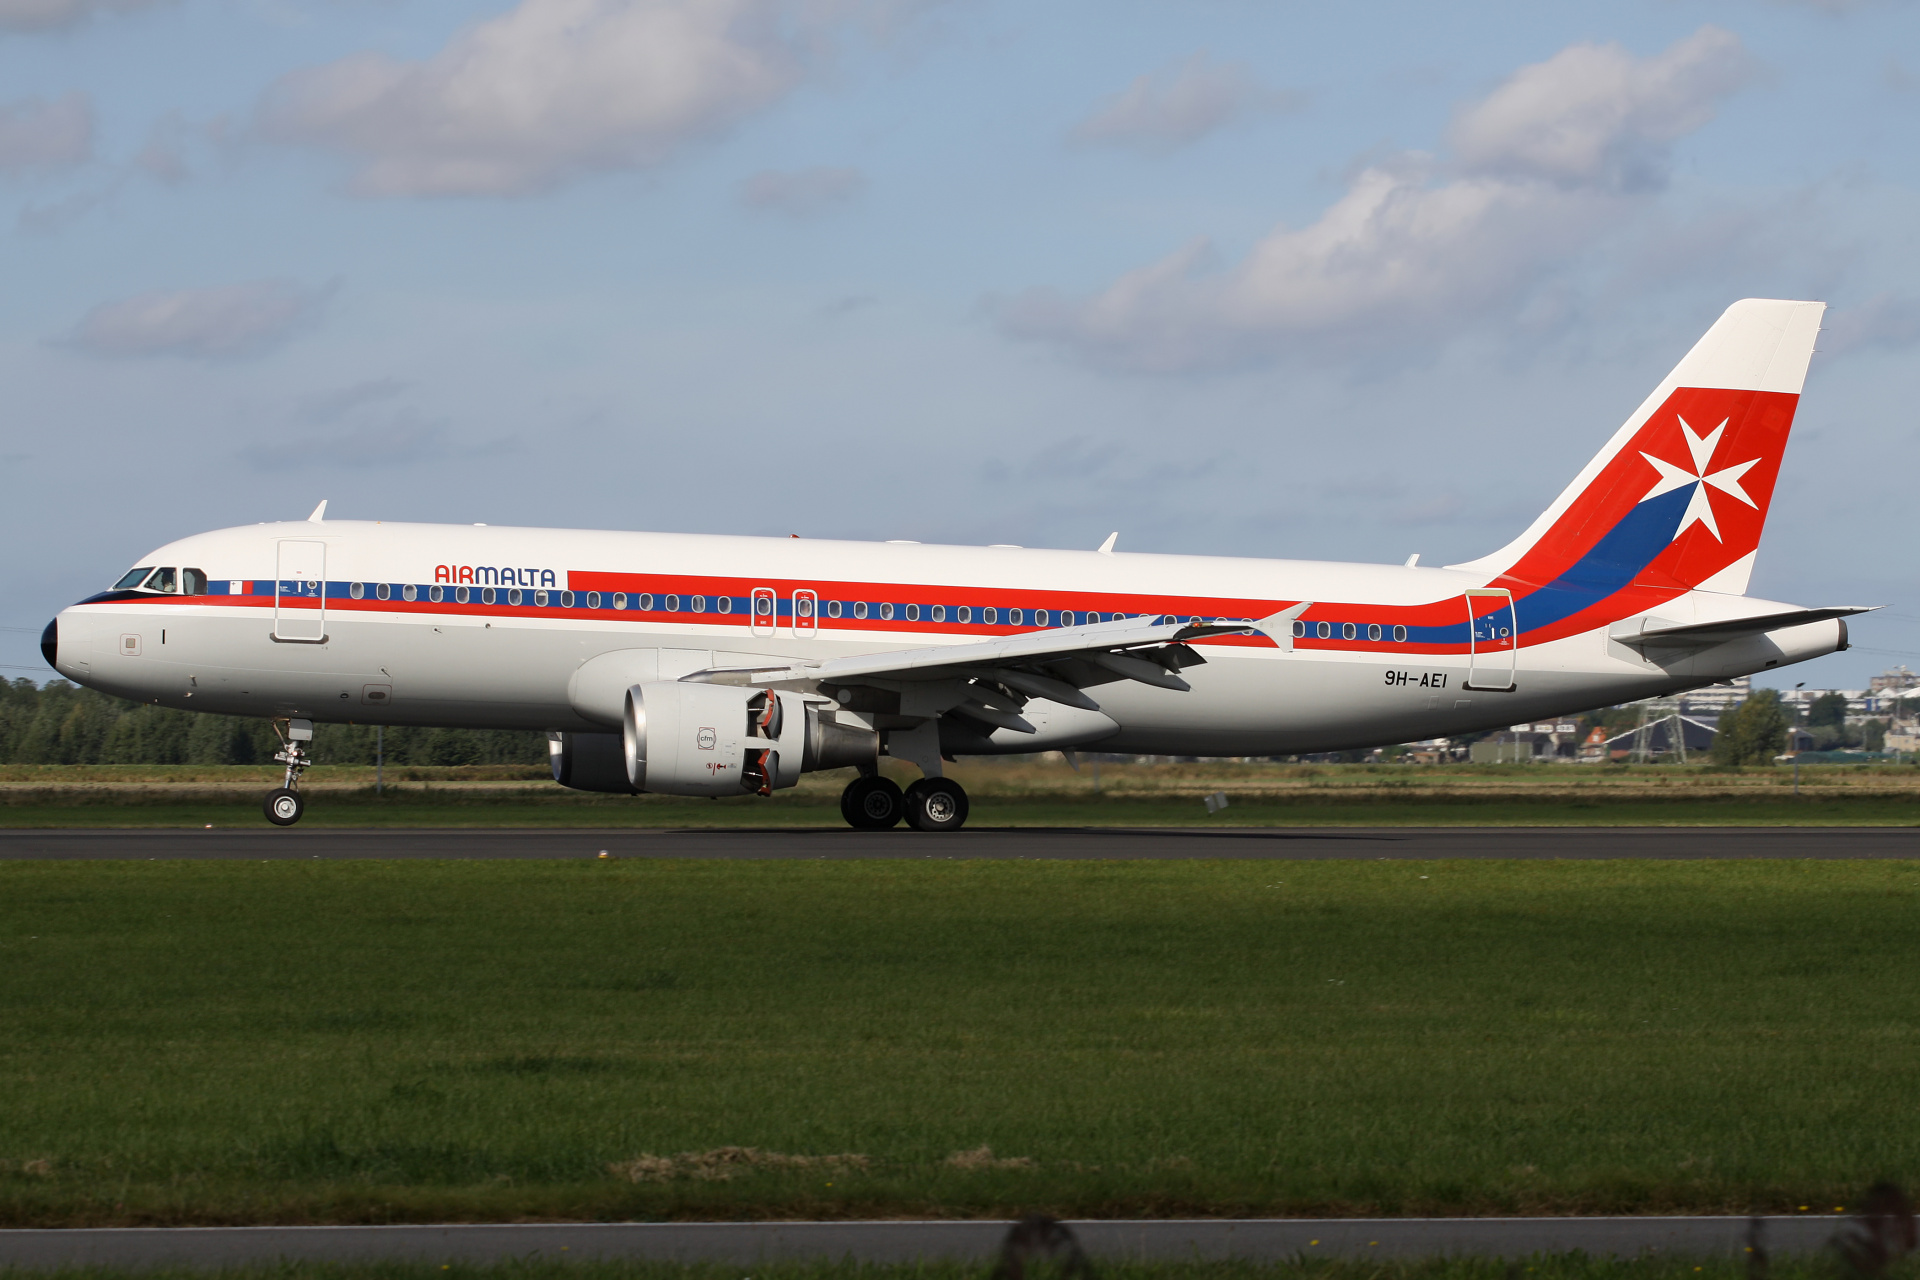 9H-AEI, Air Malta (retro livery) (Aircraft » Schiphol Spotting » Airbus A320-200)